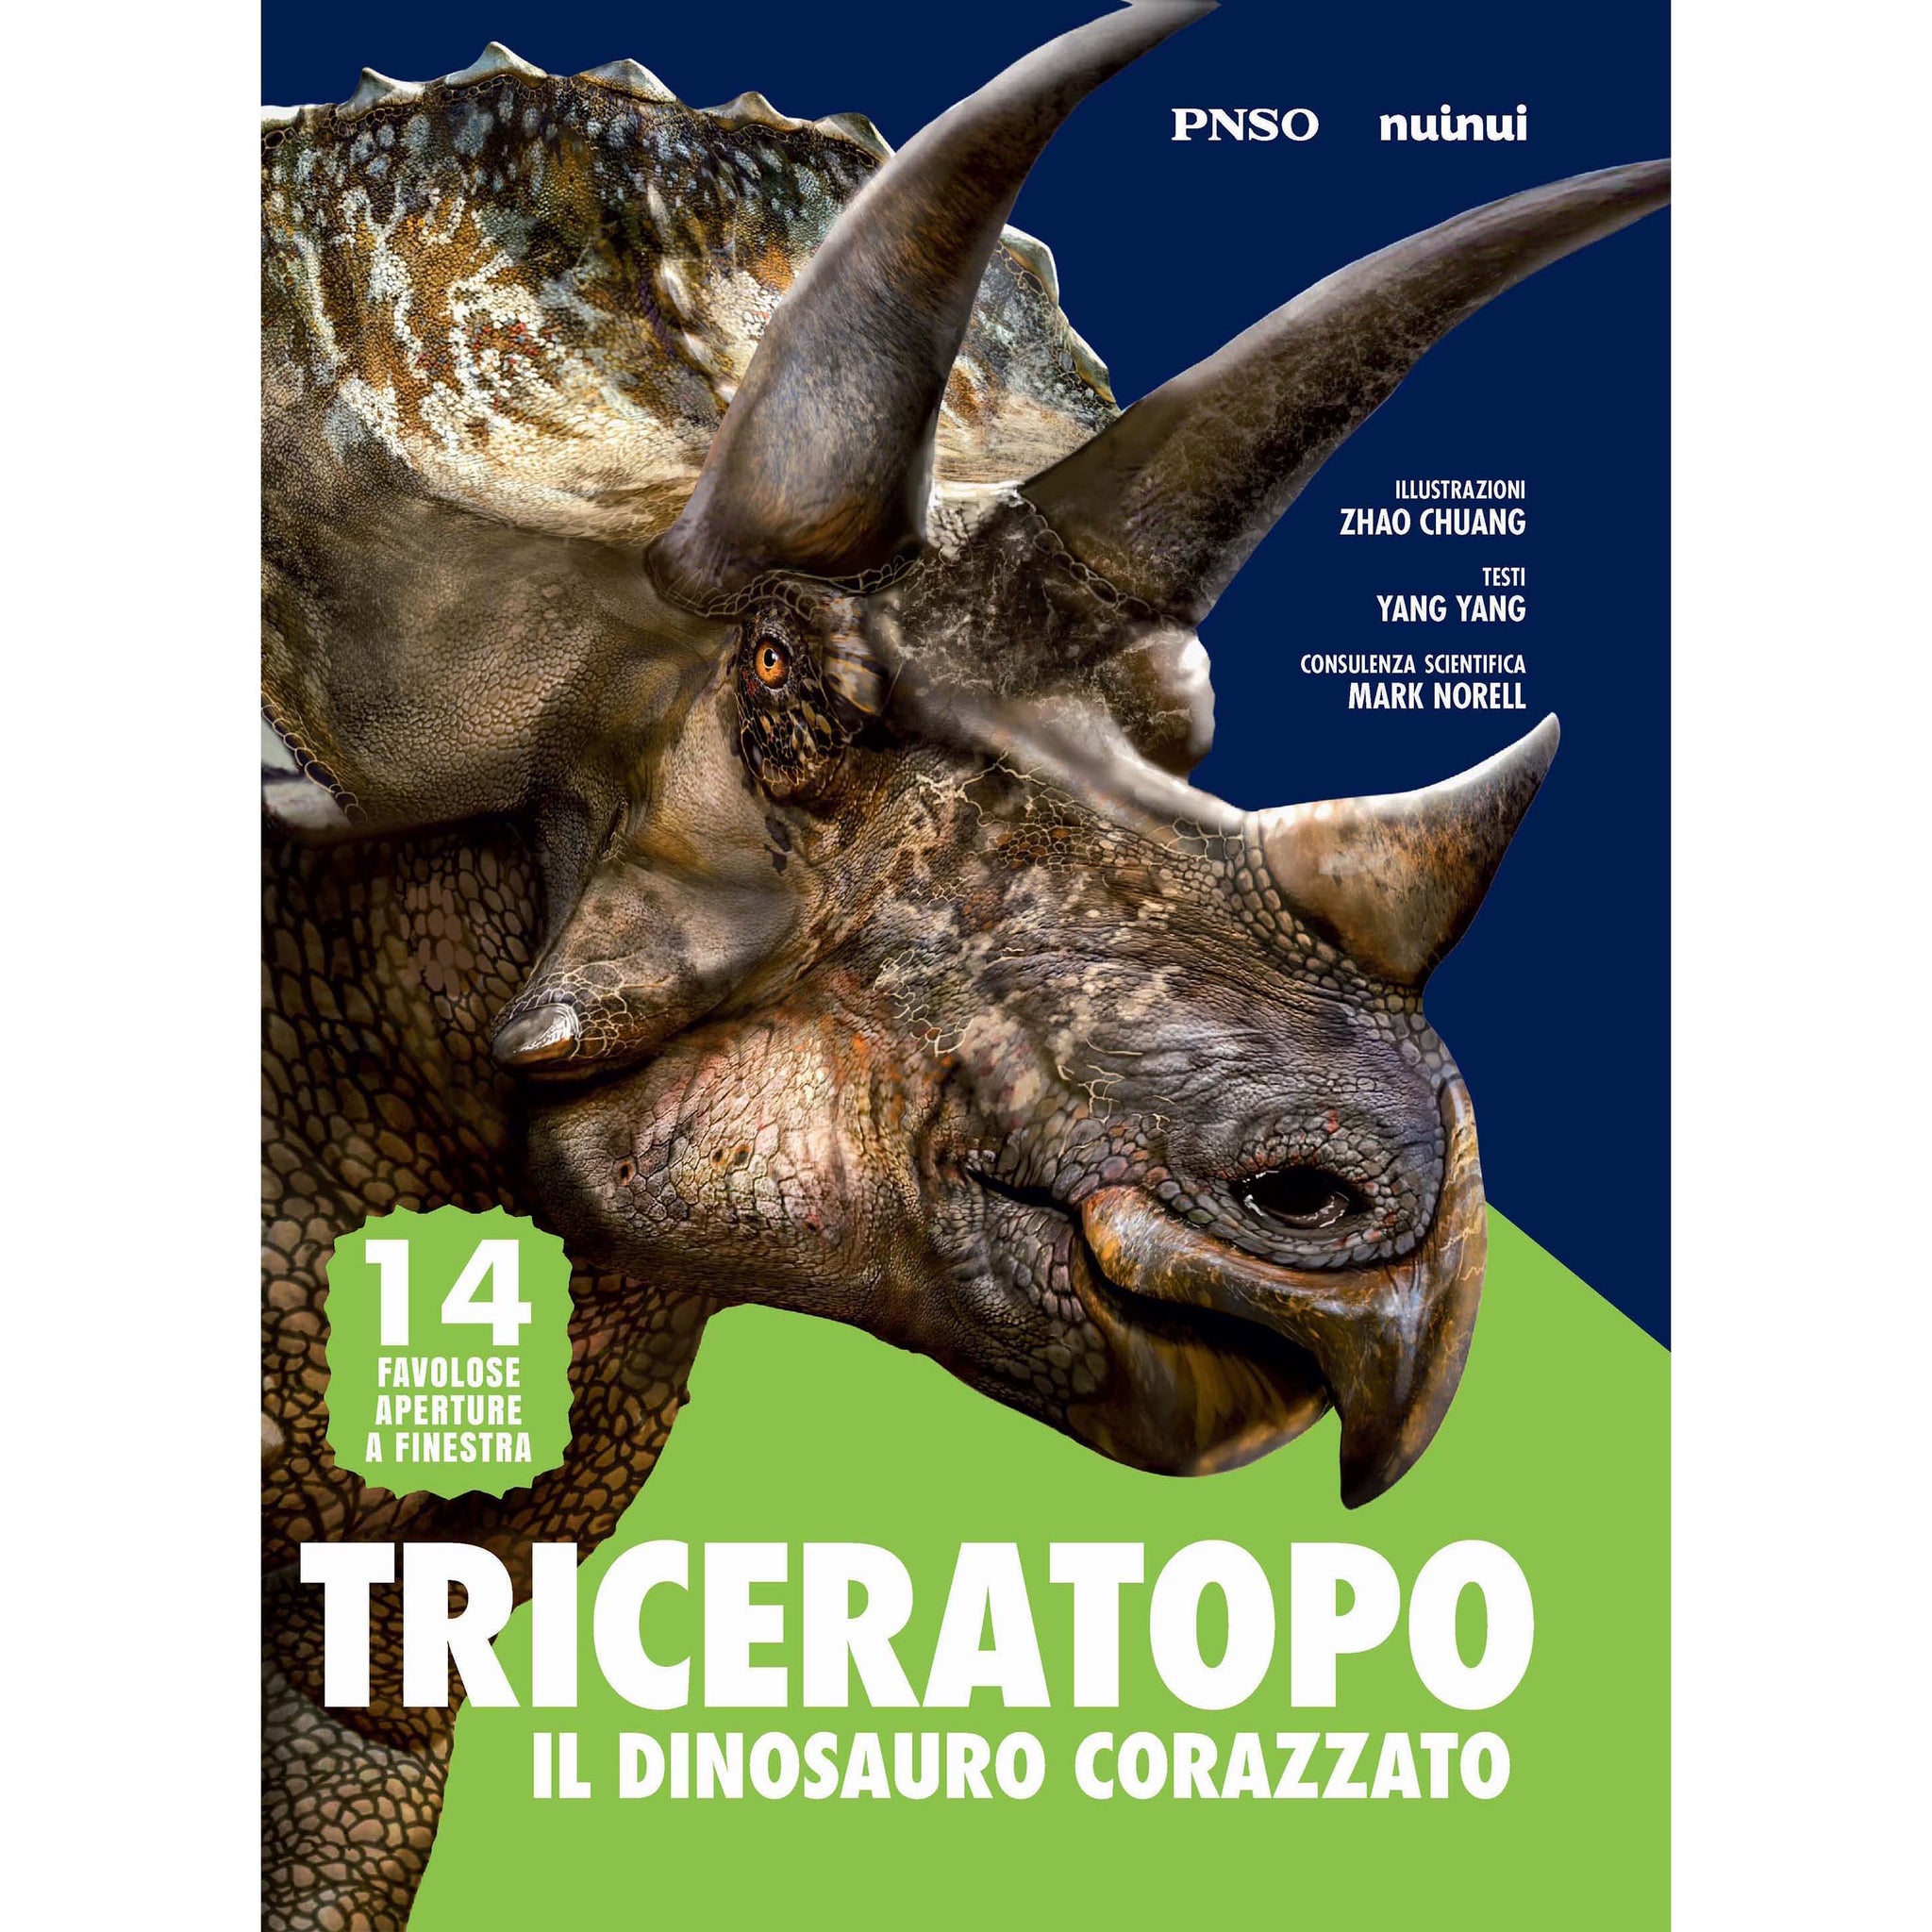 Triceratops - The armored dinosaur